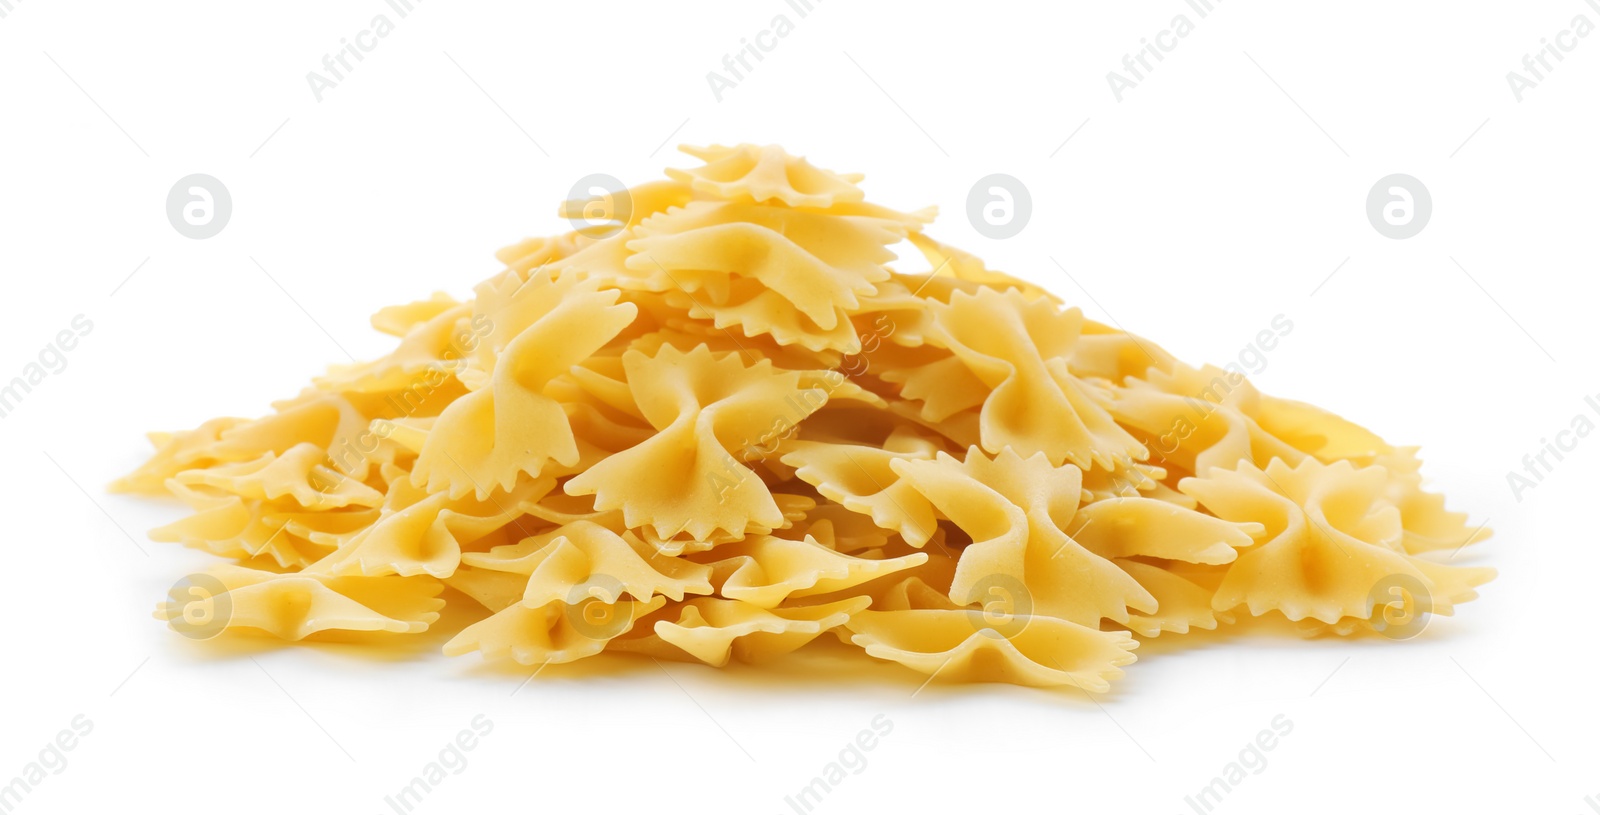 Photo of Uncooked farfalle pasta on white background